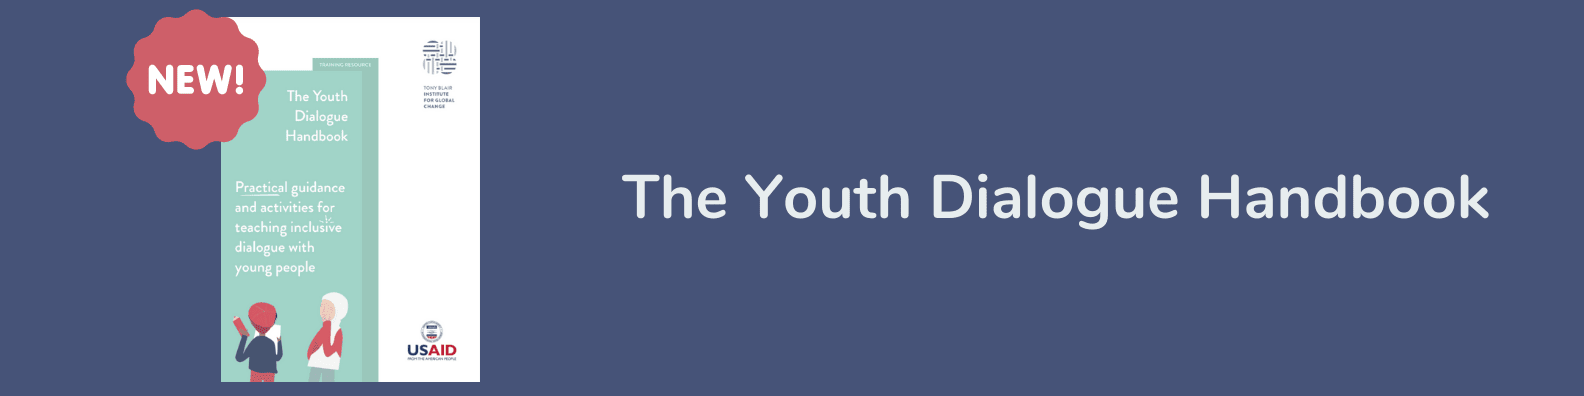 The Youth Dialogue Handbook